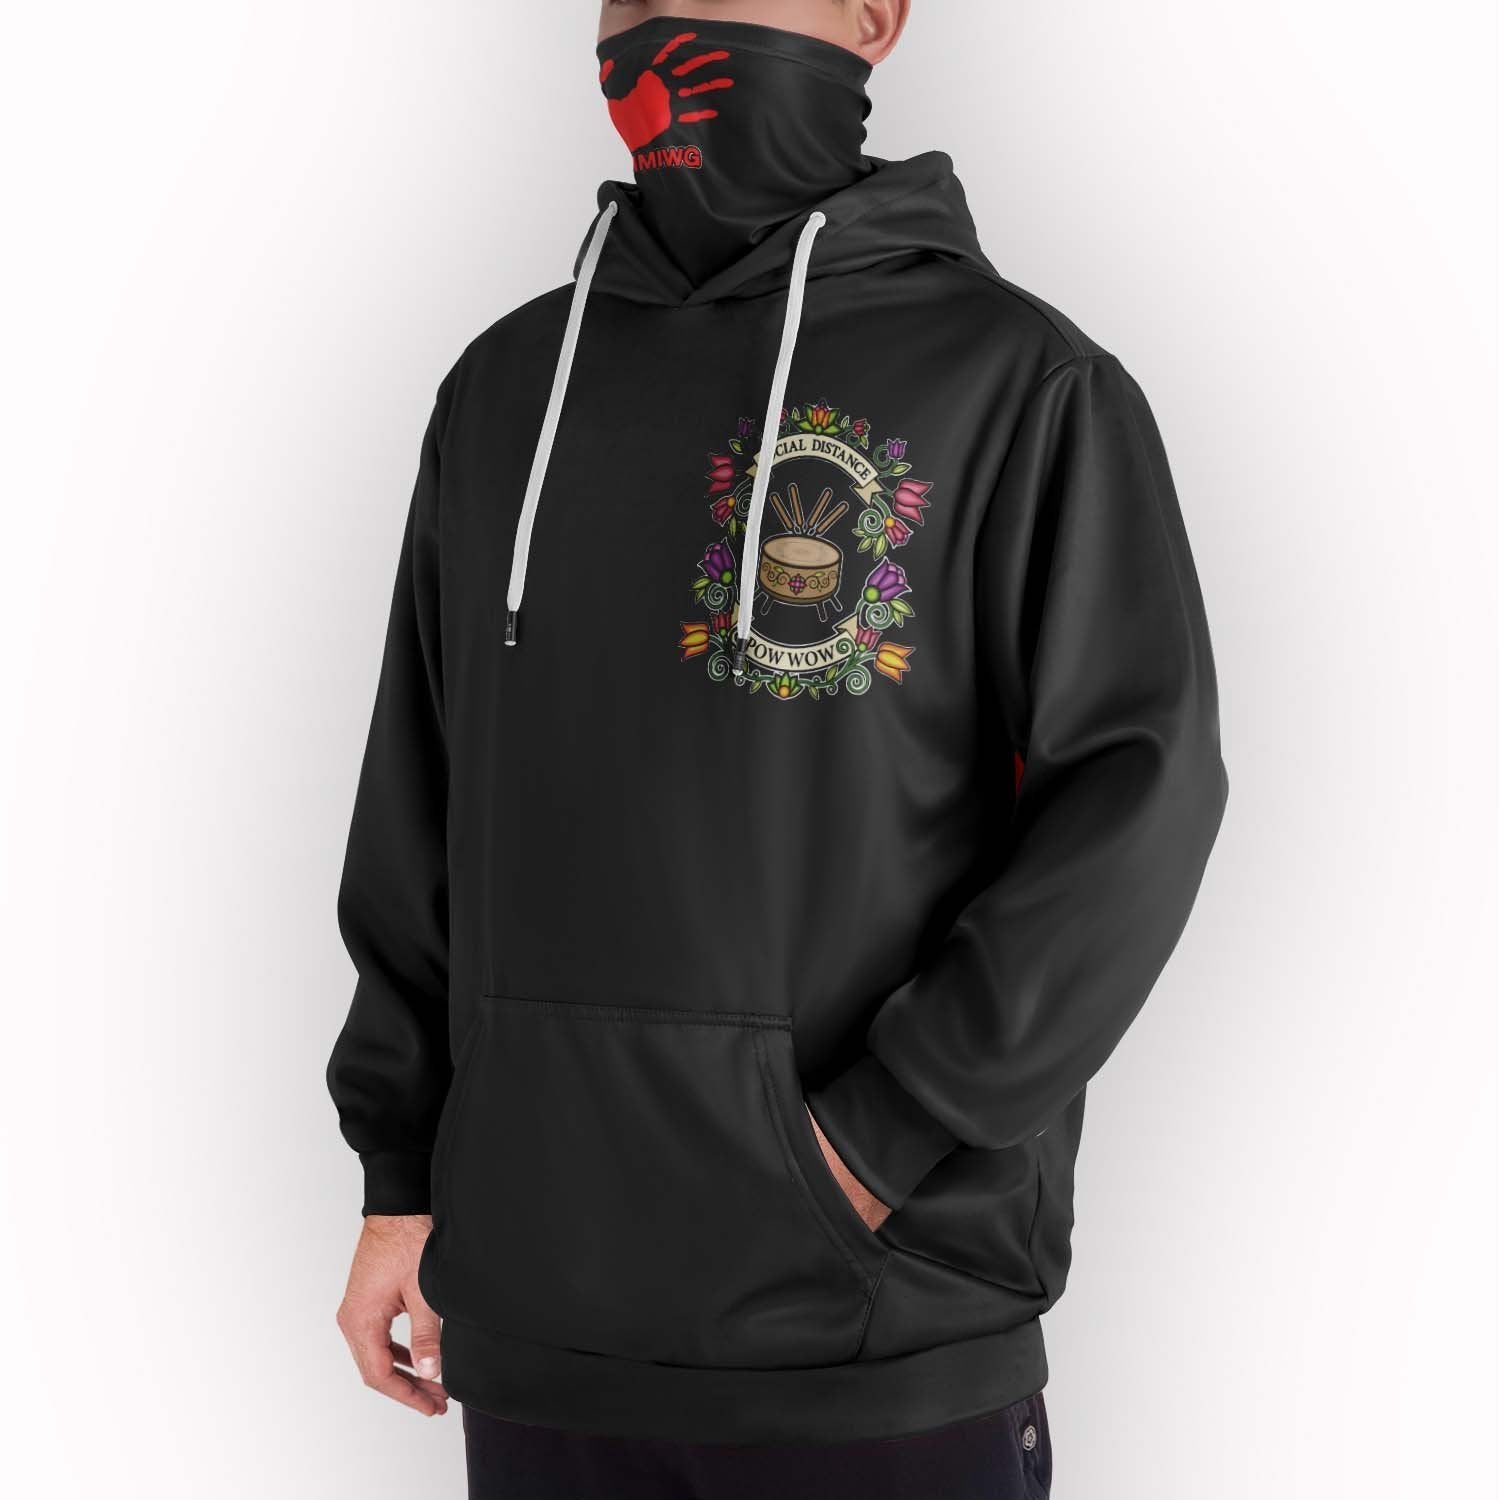 SDP MMIWG Solid Black Hoodie with Face Cover